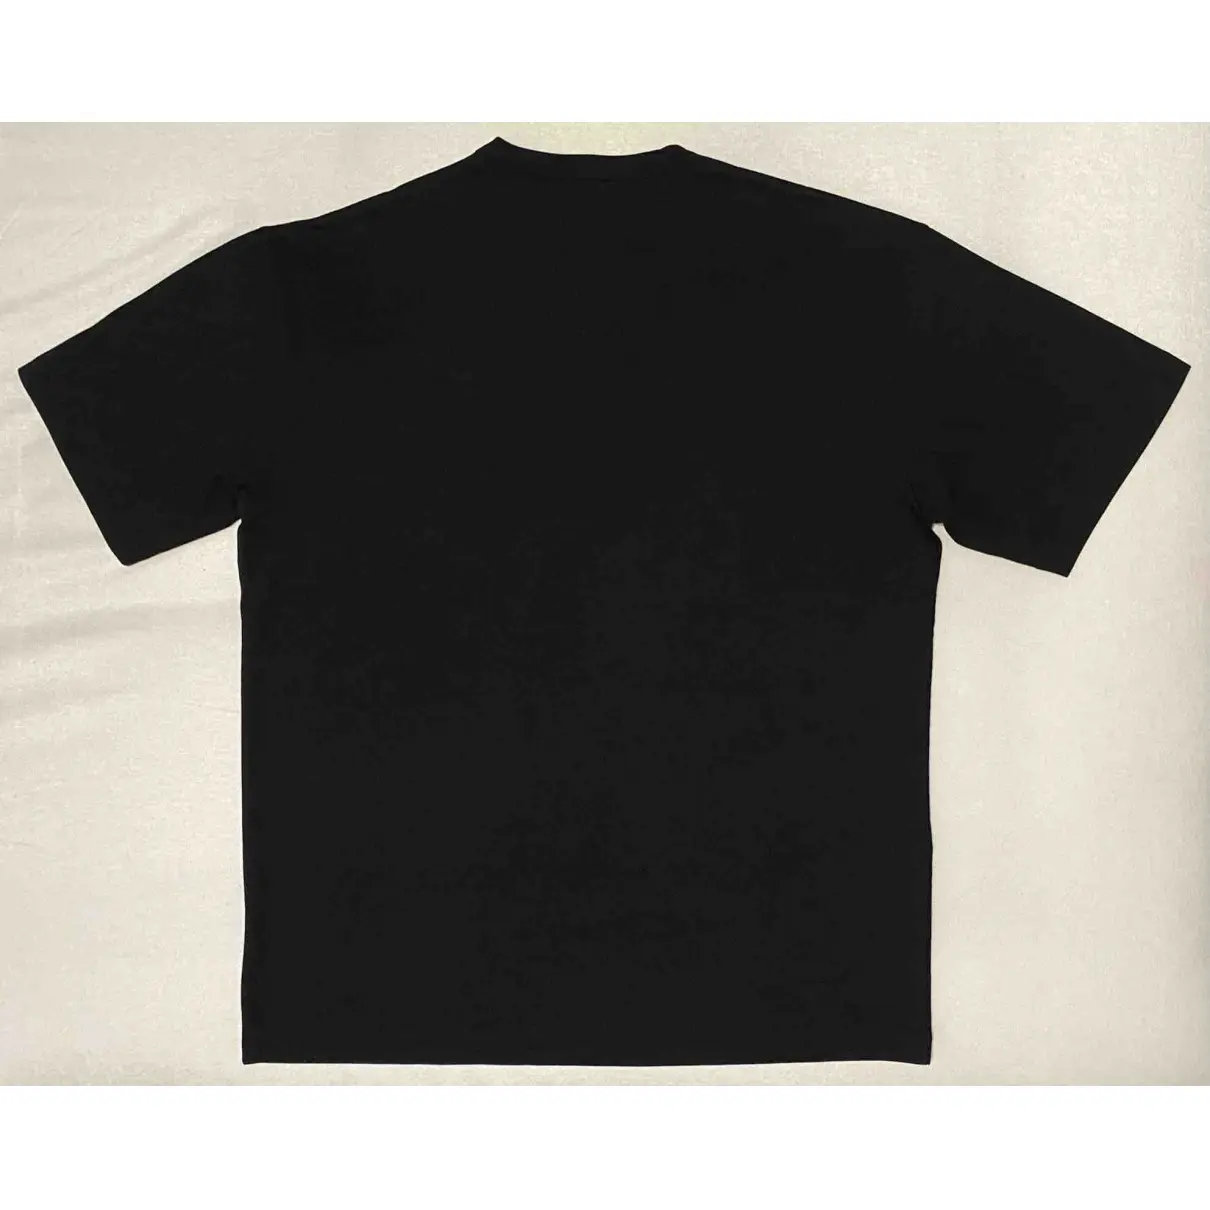 Buy Moncler Genius Moncler n°2 1952 + Valextra t-shirt online